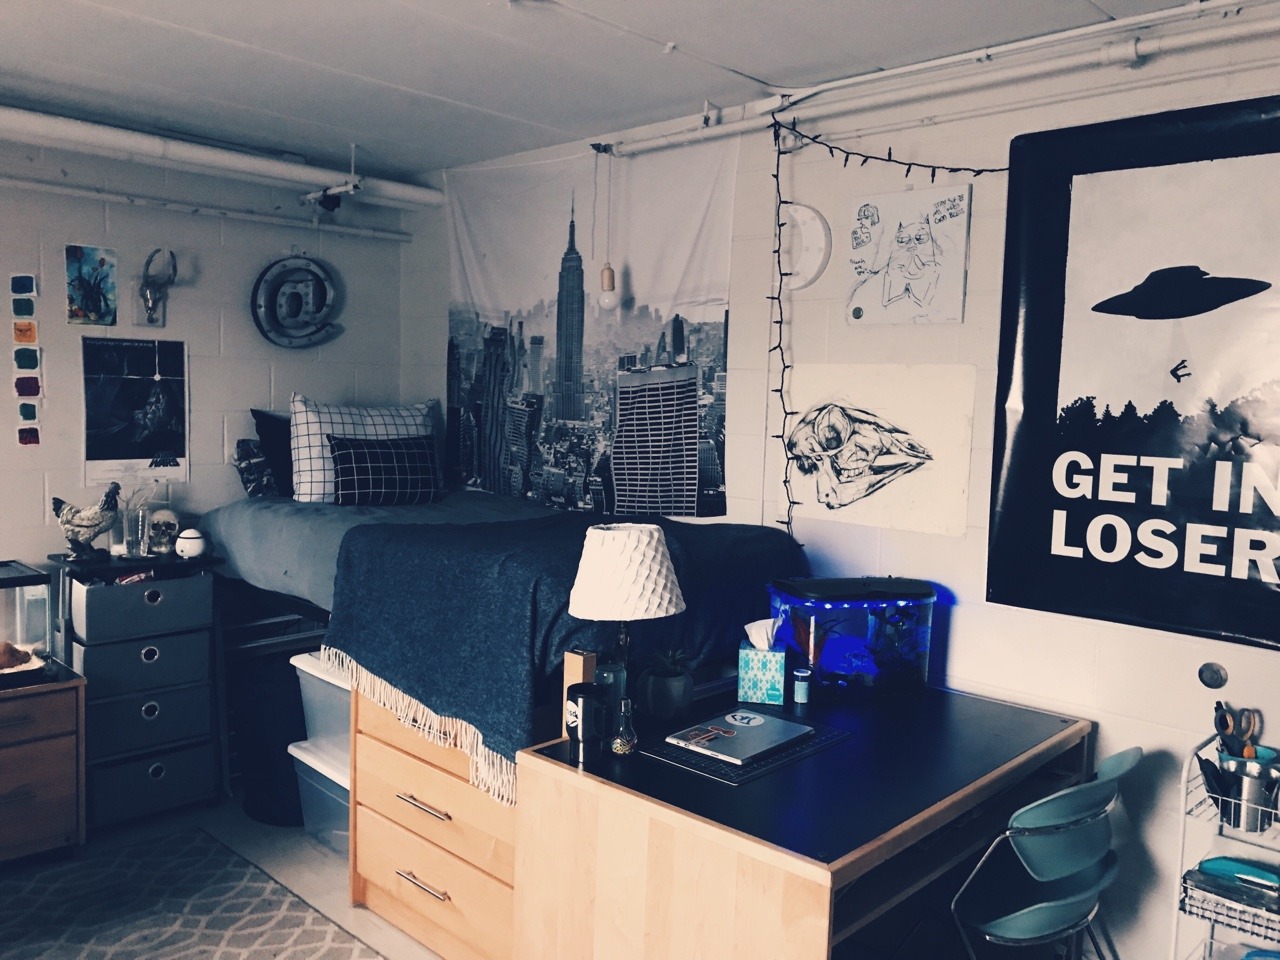 Stunning hipster bedroom ideas tumblr Tumblr Room Inspiration